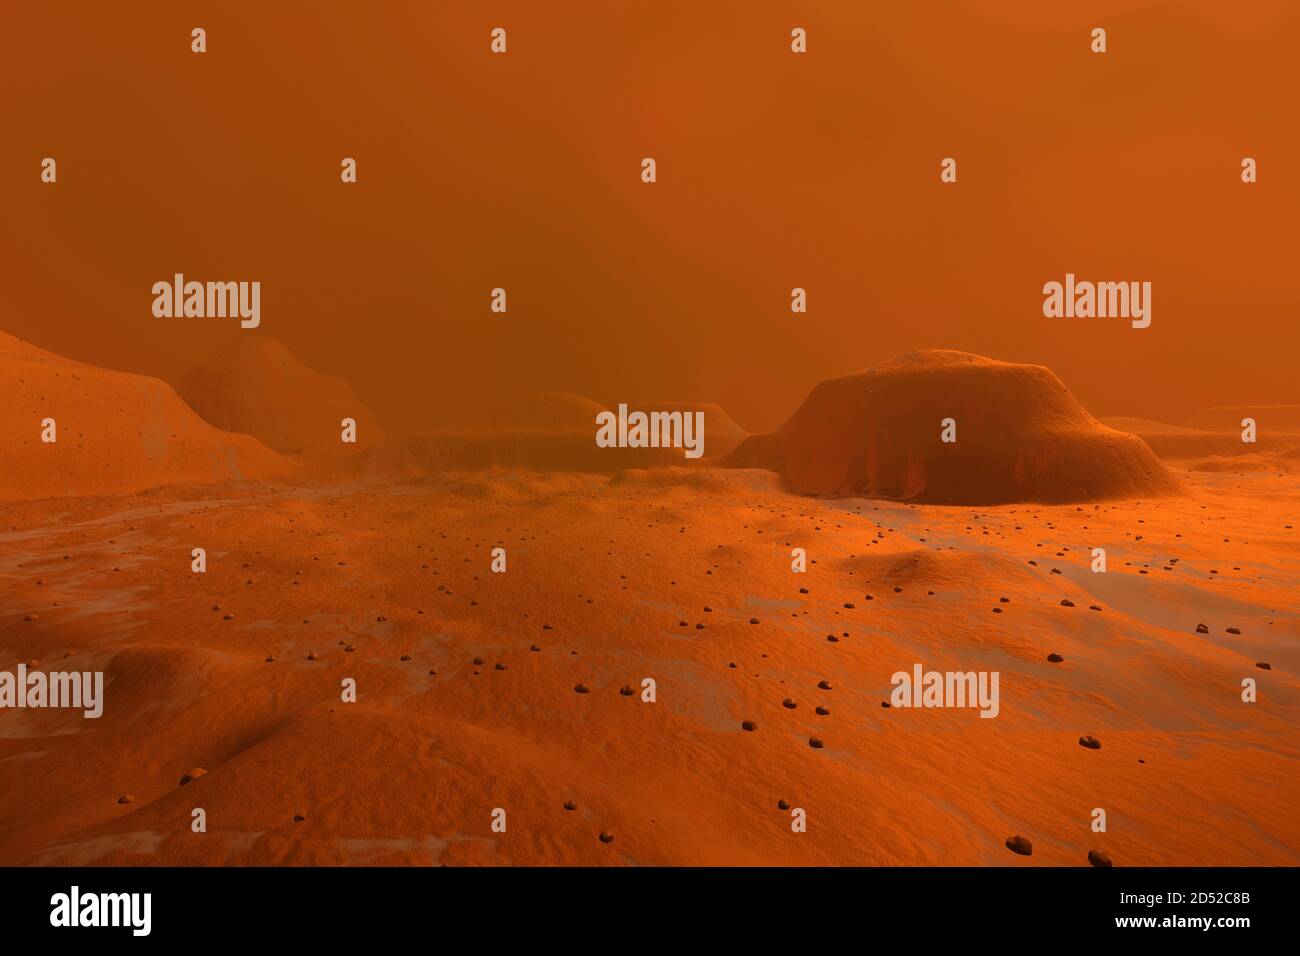 3D Illustration of a landscape on Planet Mars. Stock Photo